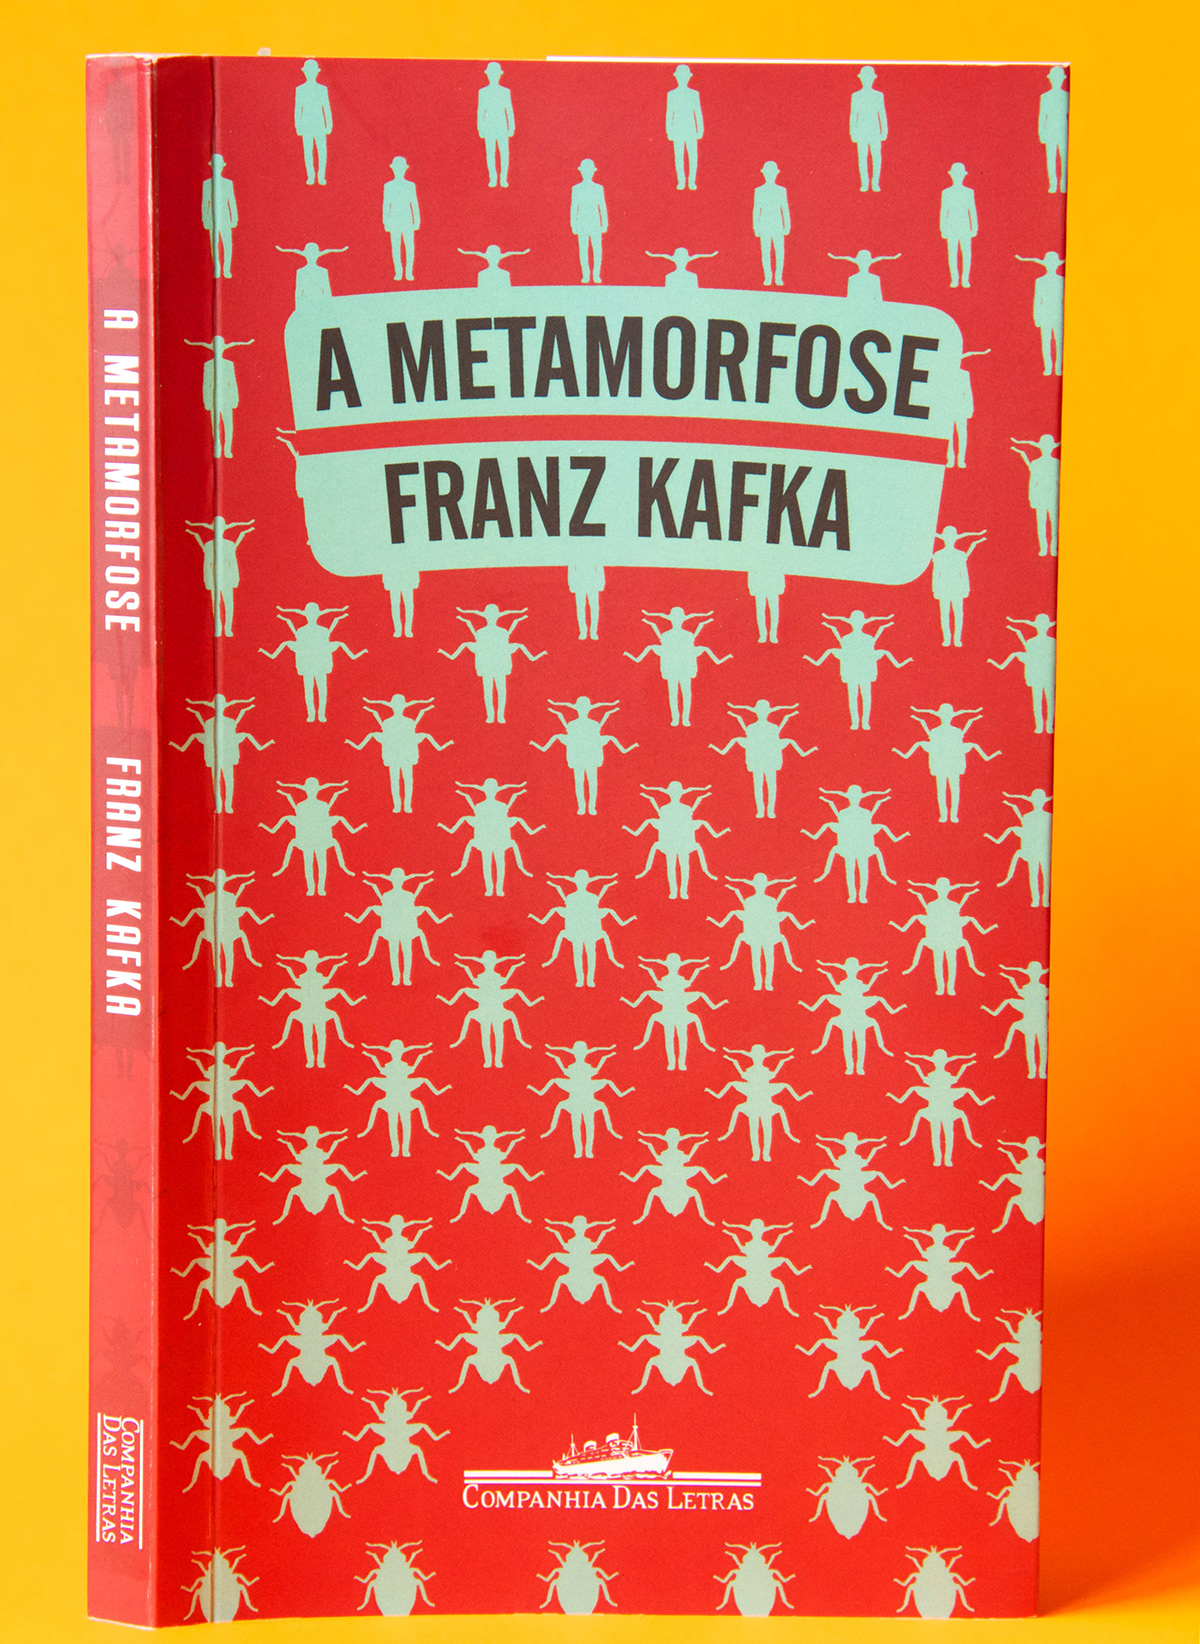 Livro book franz the metamorphosis Metamorphosis metarmofose surrealism cover